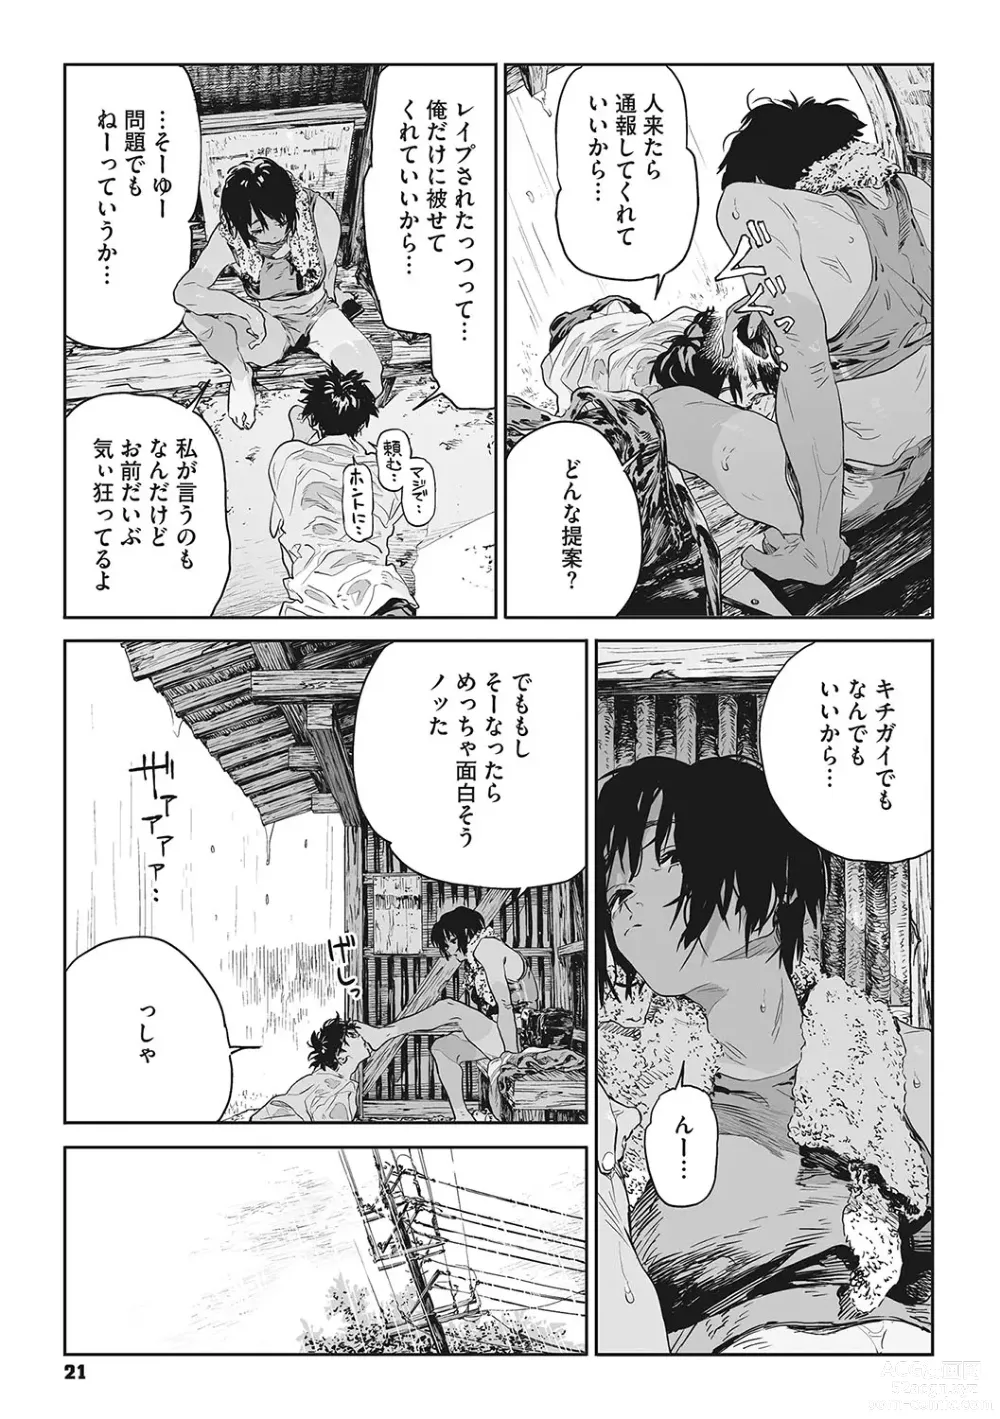 Page 20 of manga Ito o Yoru